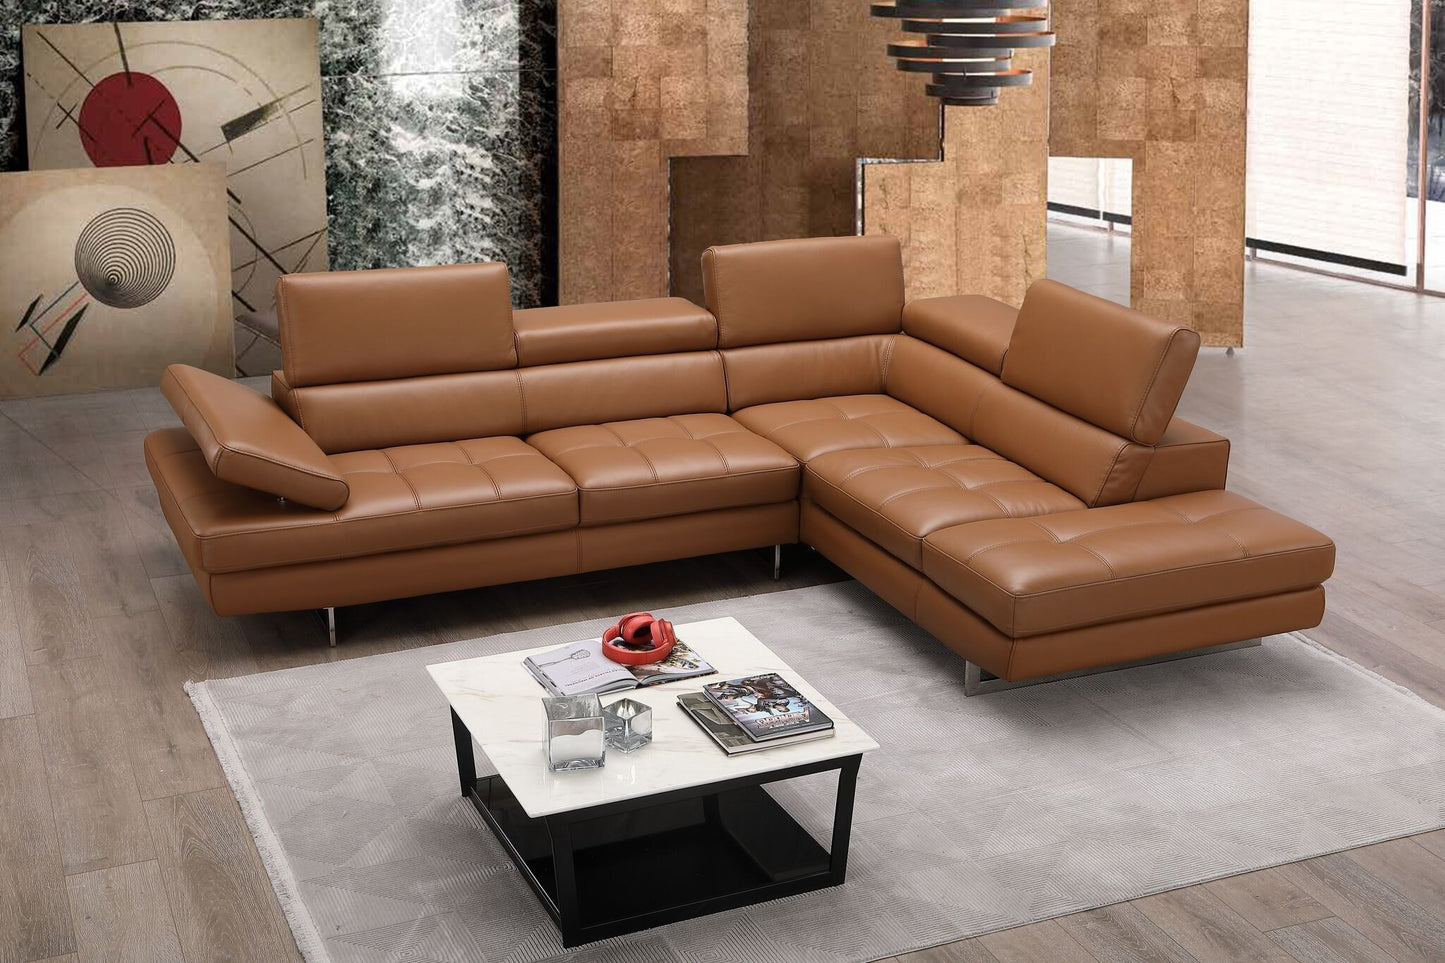 A761 Italian Leather Sectional Sofa Caramel RHF by JM